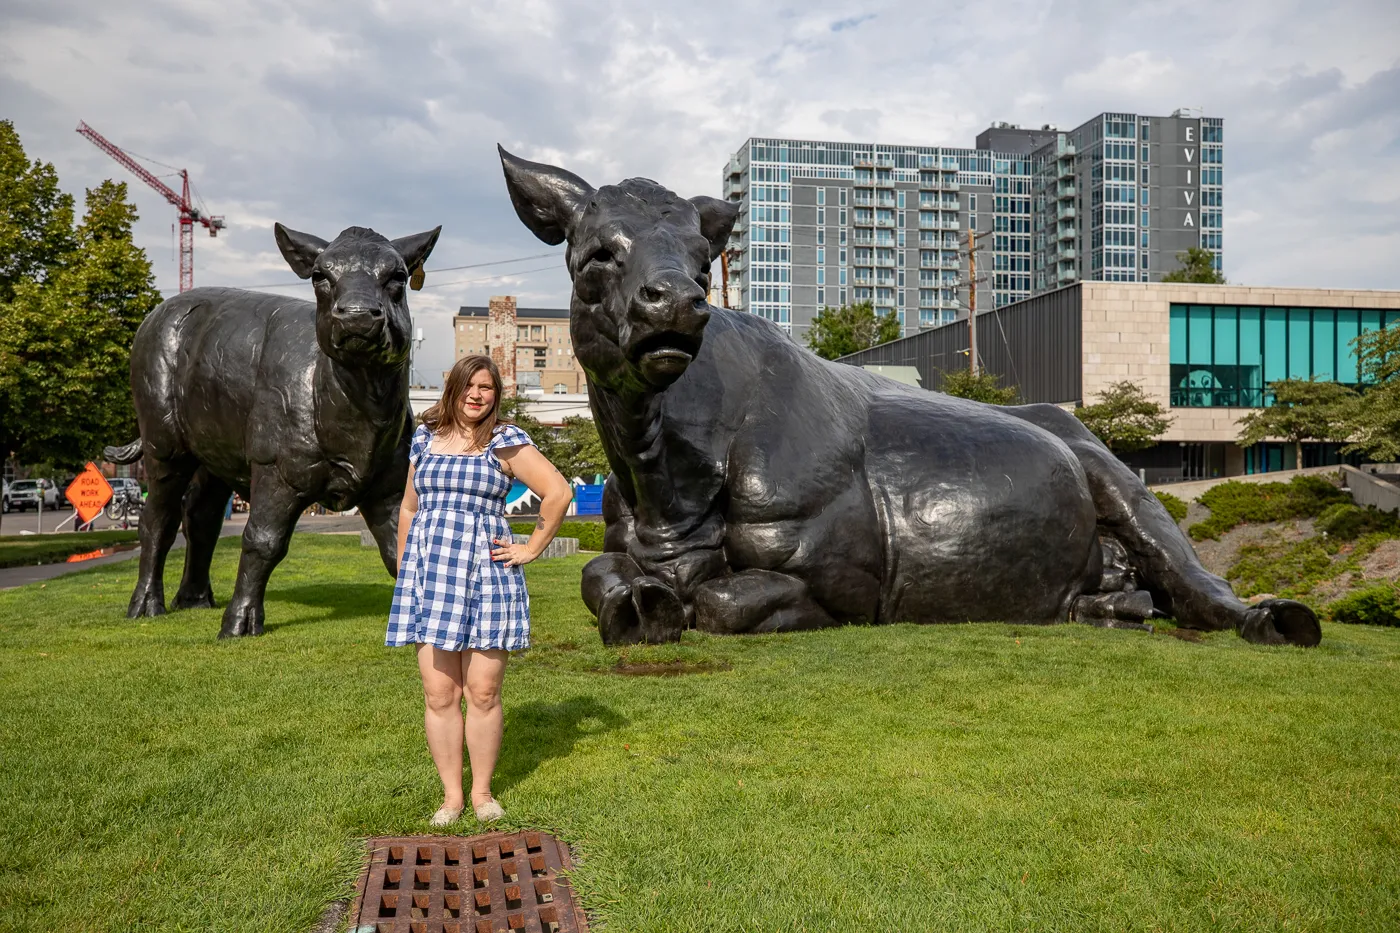 Scottish Angus Cow & Calf - Giant Cows in Denver, Colorado roadside attraction